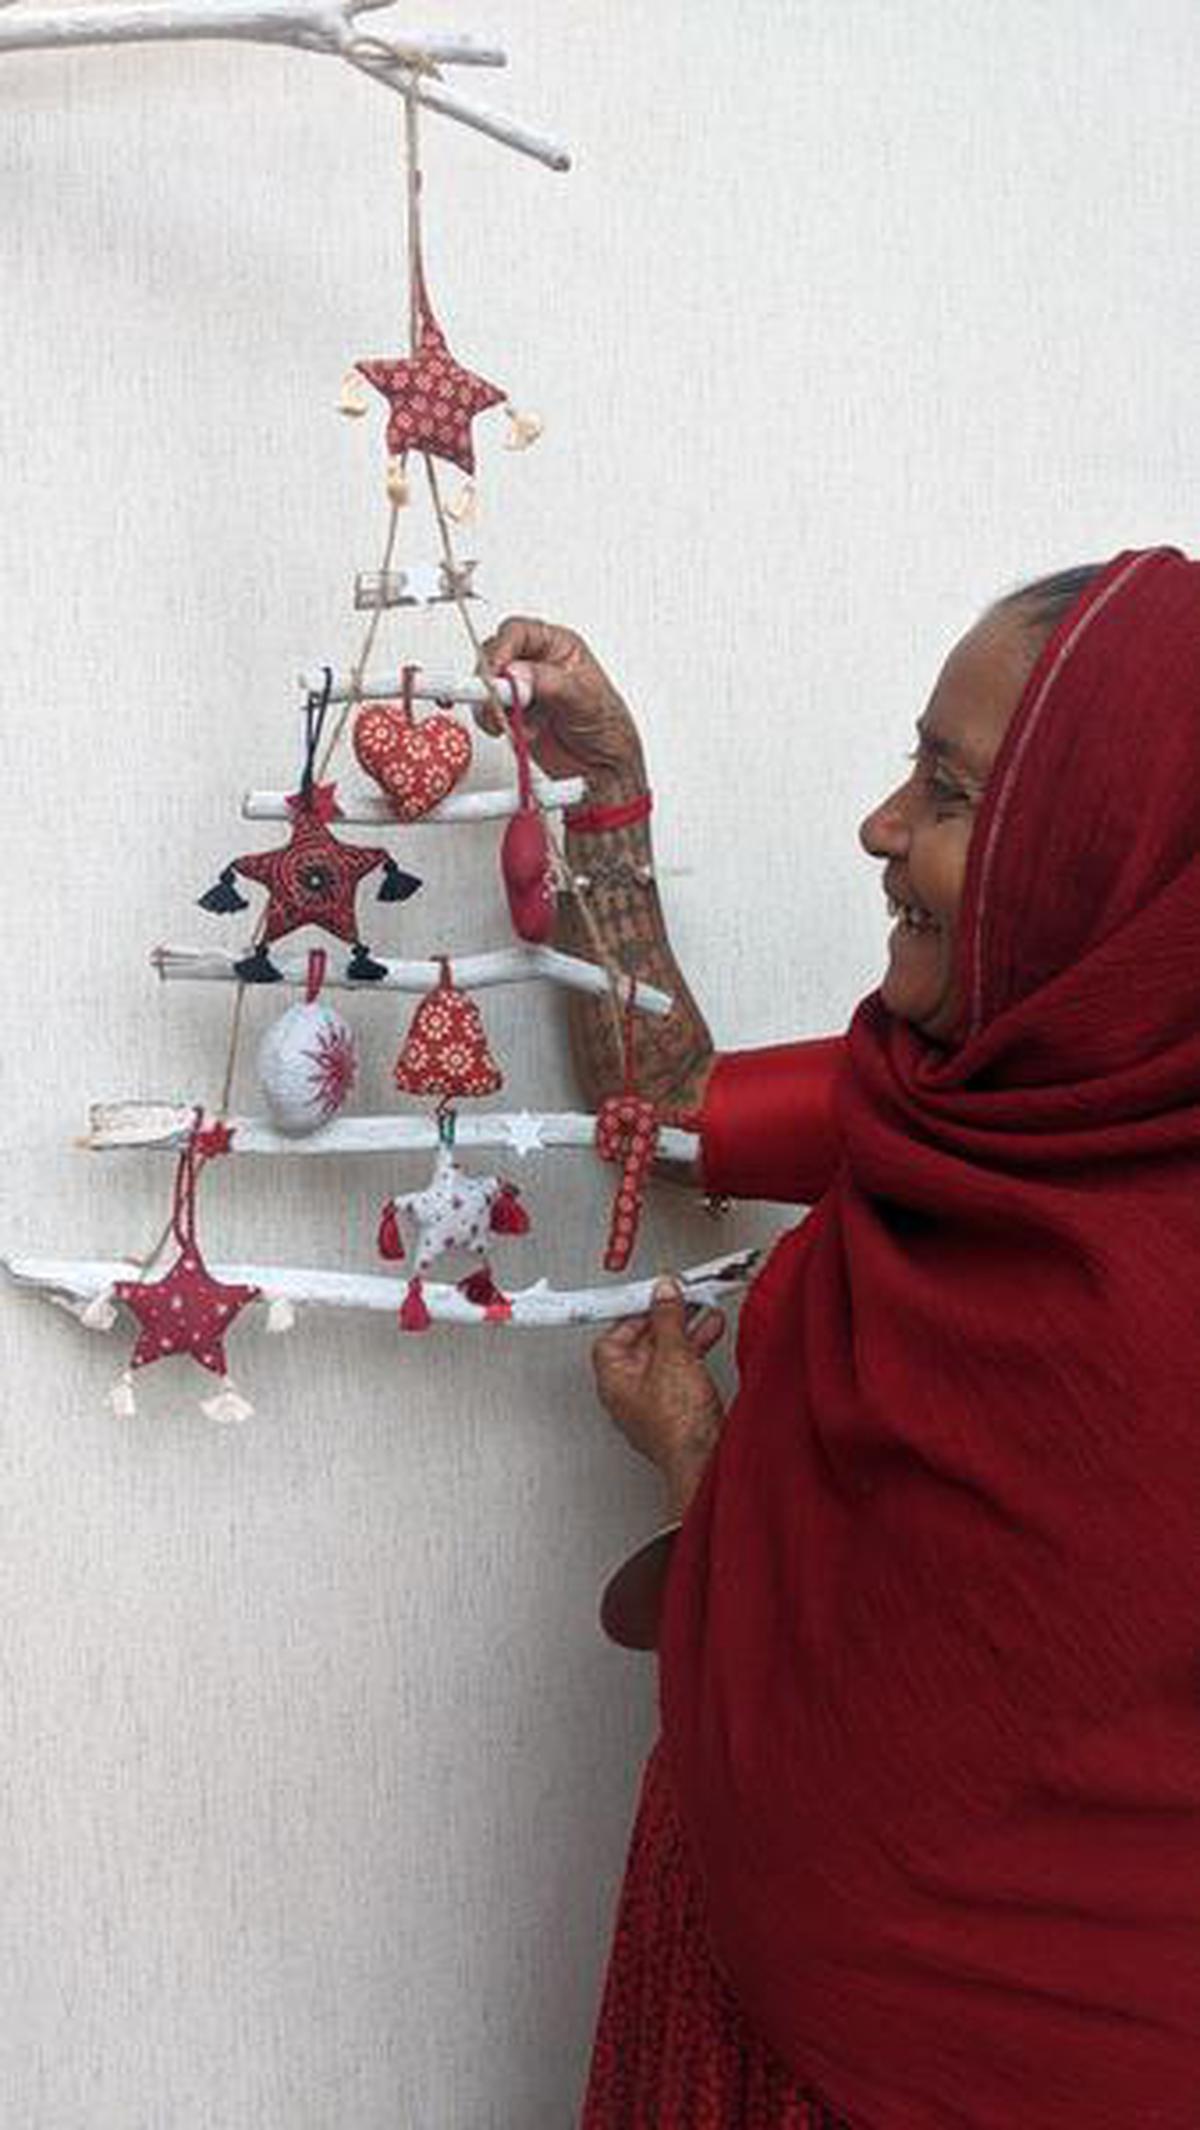 This Christmas, hang chocolate baubles, glossy veggies, and papier-mâché Santas, handmade by artisans across India